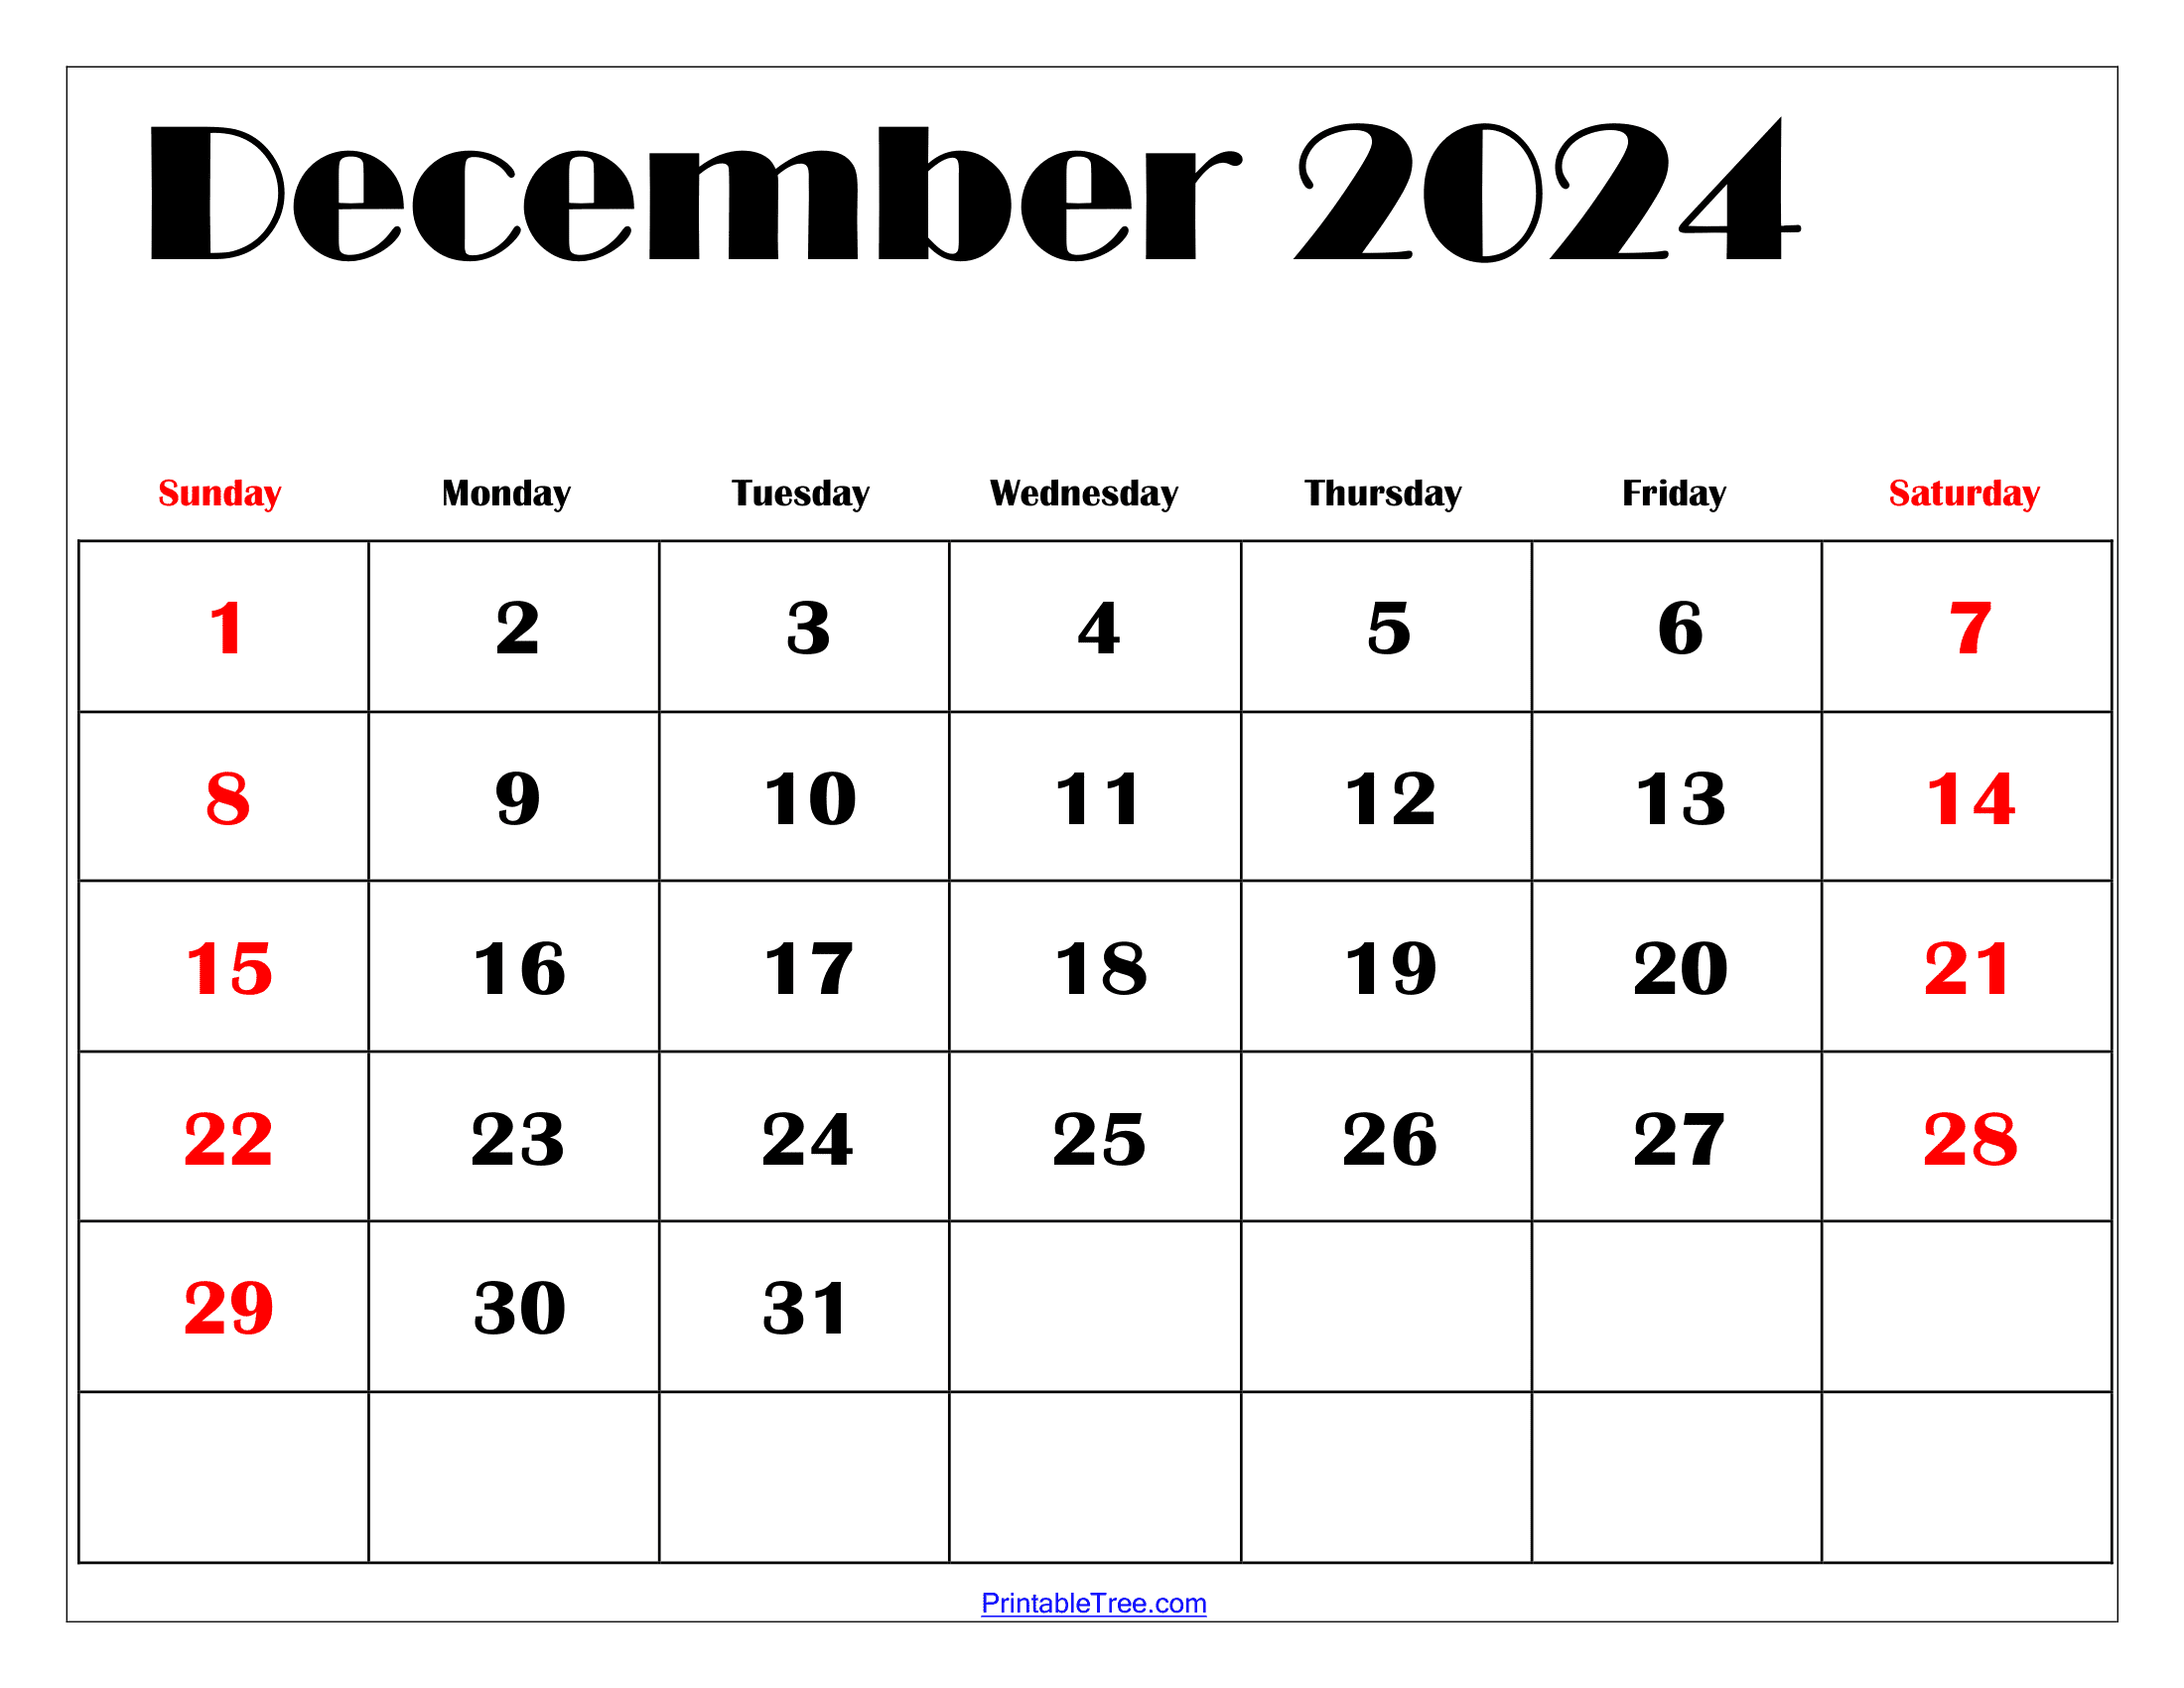 December 2024 Calendar Printable Pdf Blank Free Templates intended for Free Printable Blank December 2024 Calendar